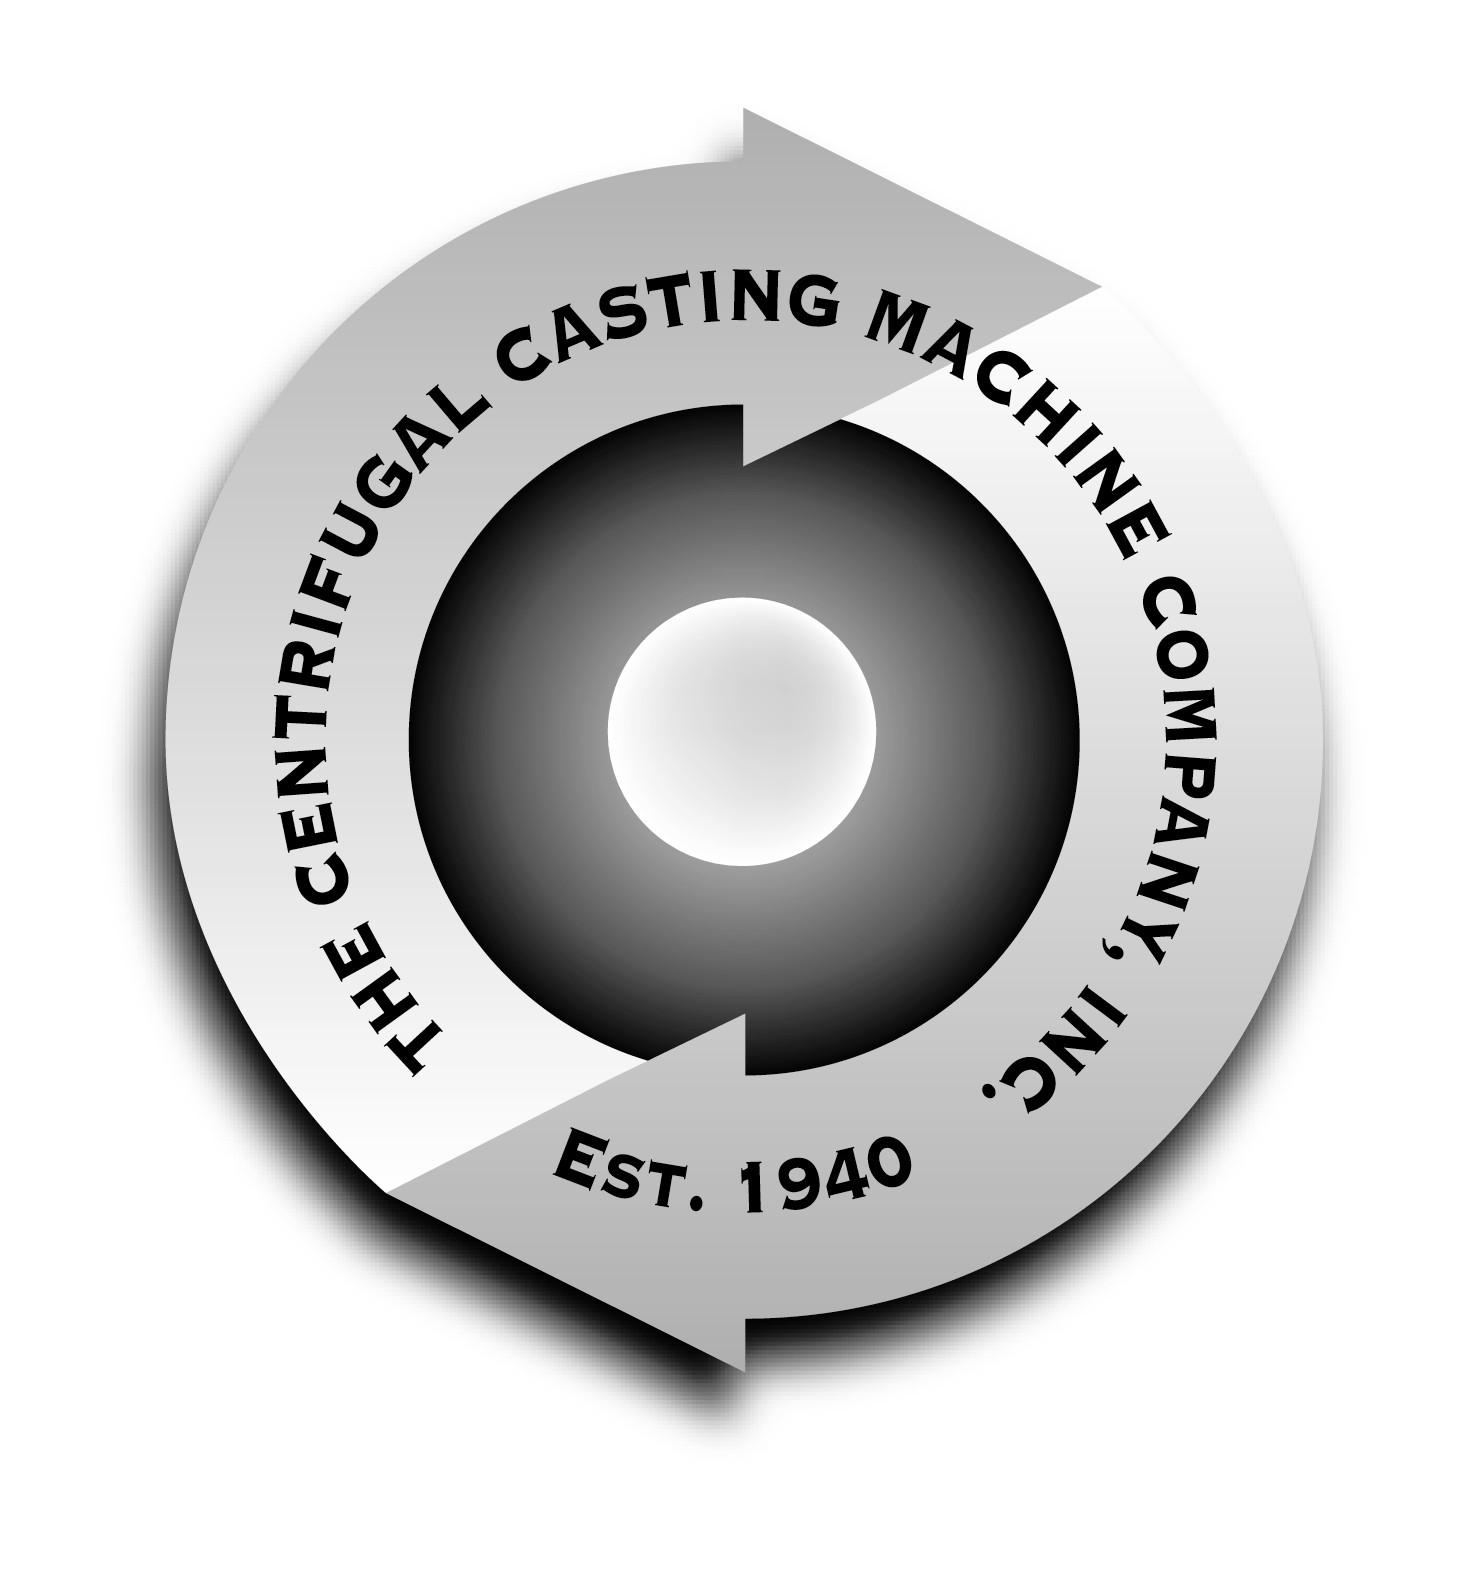 Product Cast Iron Soil Pipe - Centrifugal Casting Machine Company, Inc image